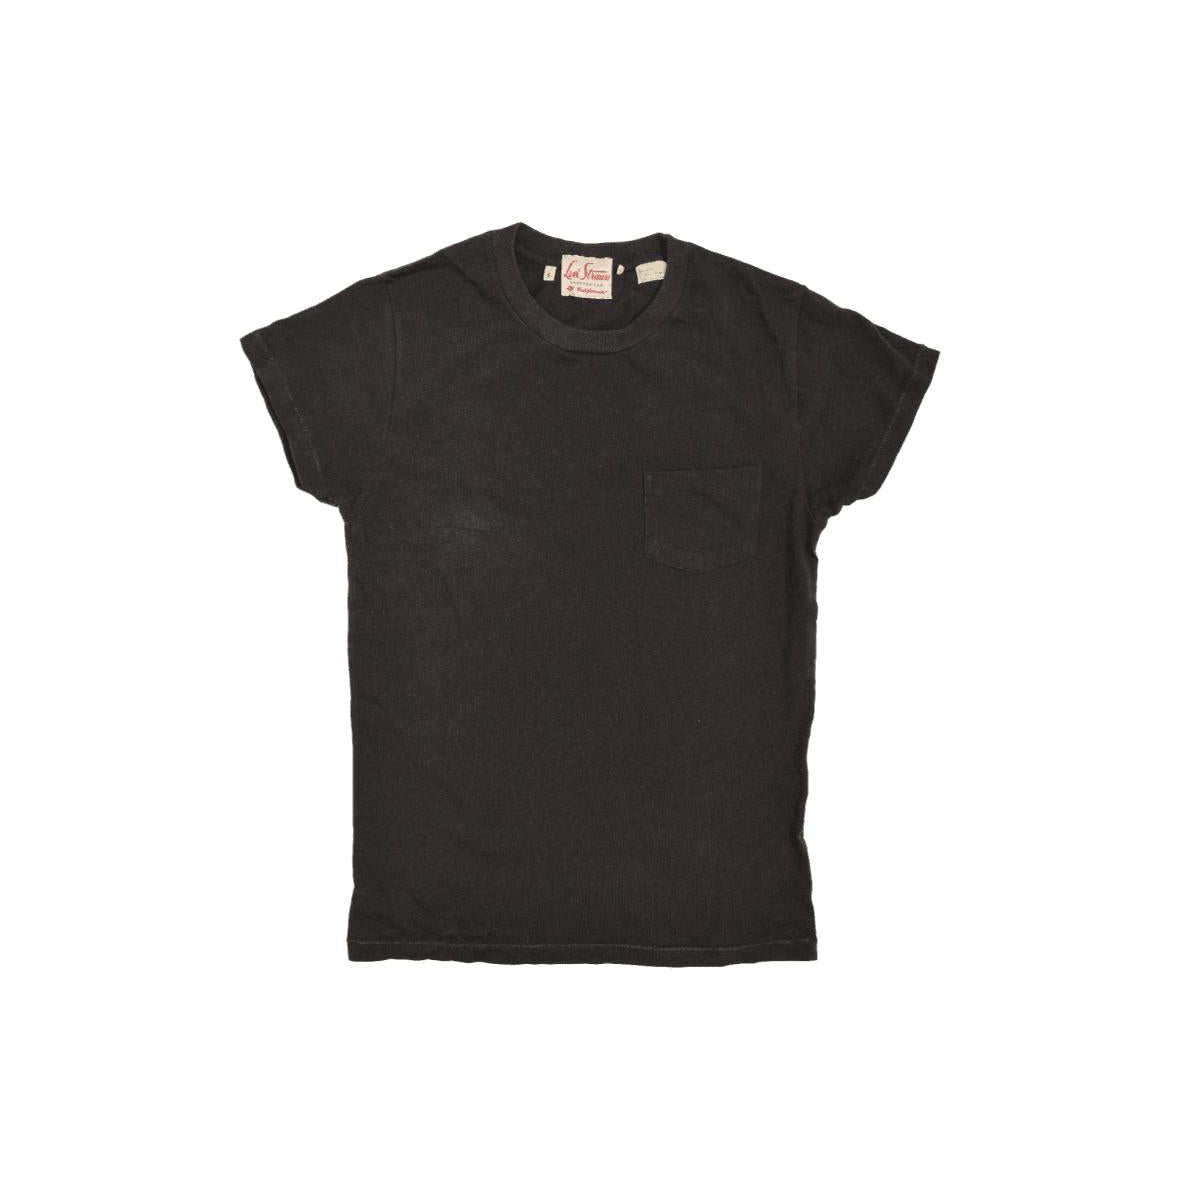 Levis Vintage Clothing 1950's Sportswear T-Shirt Black - MILWORKS